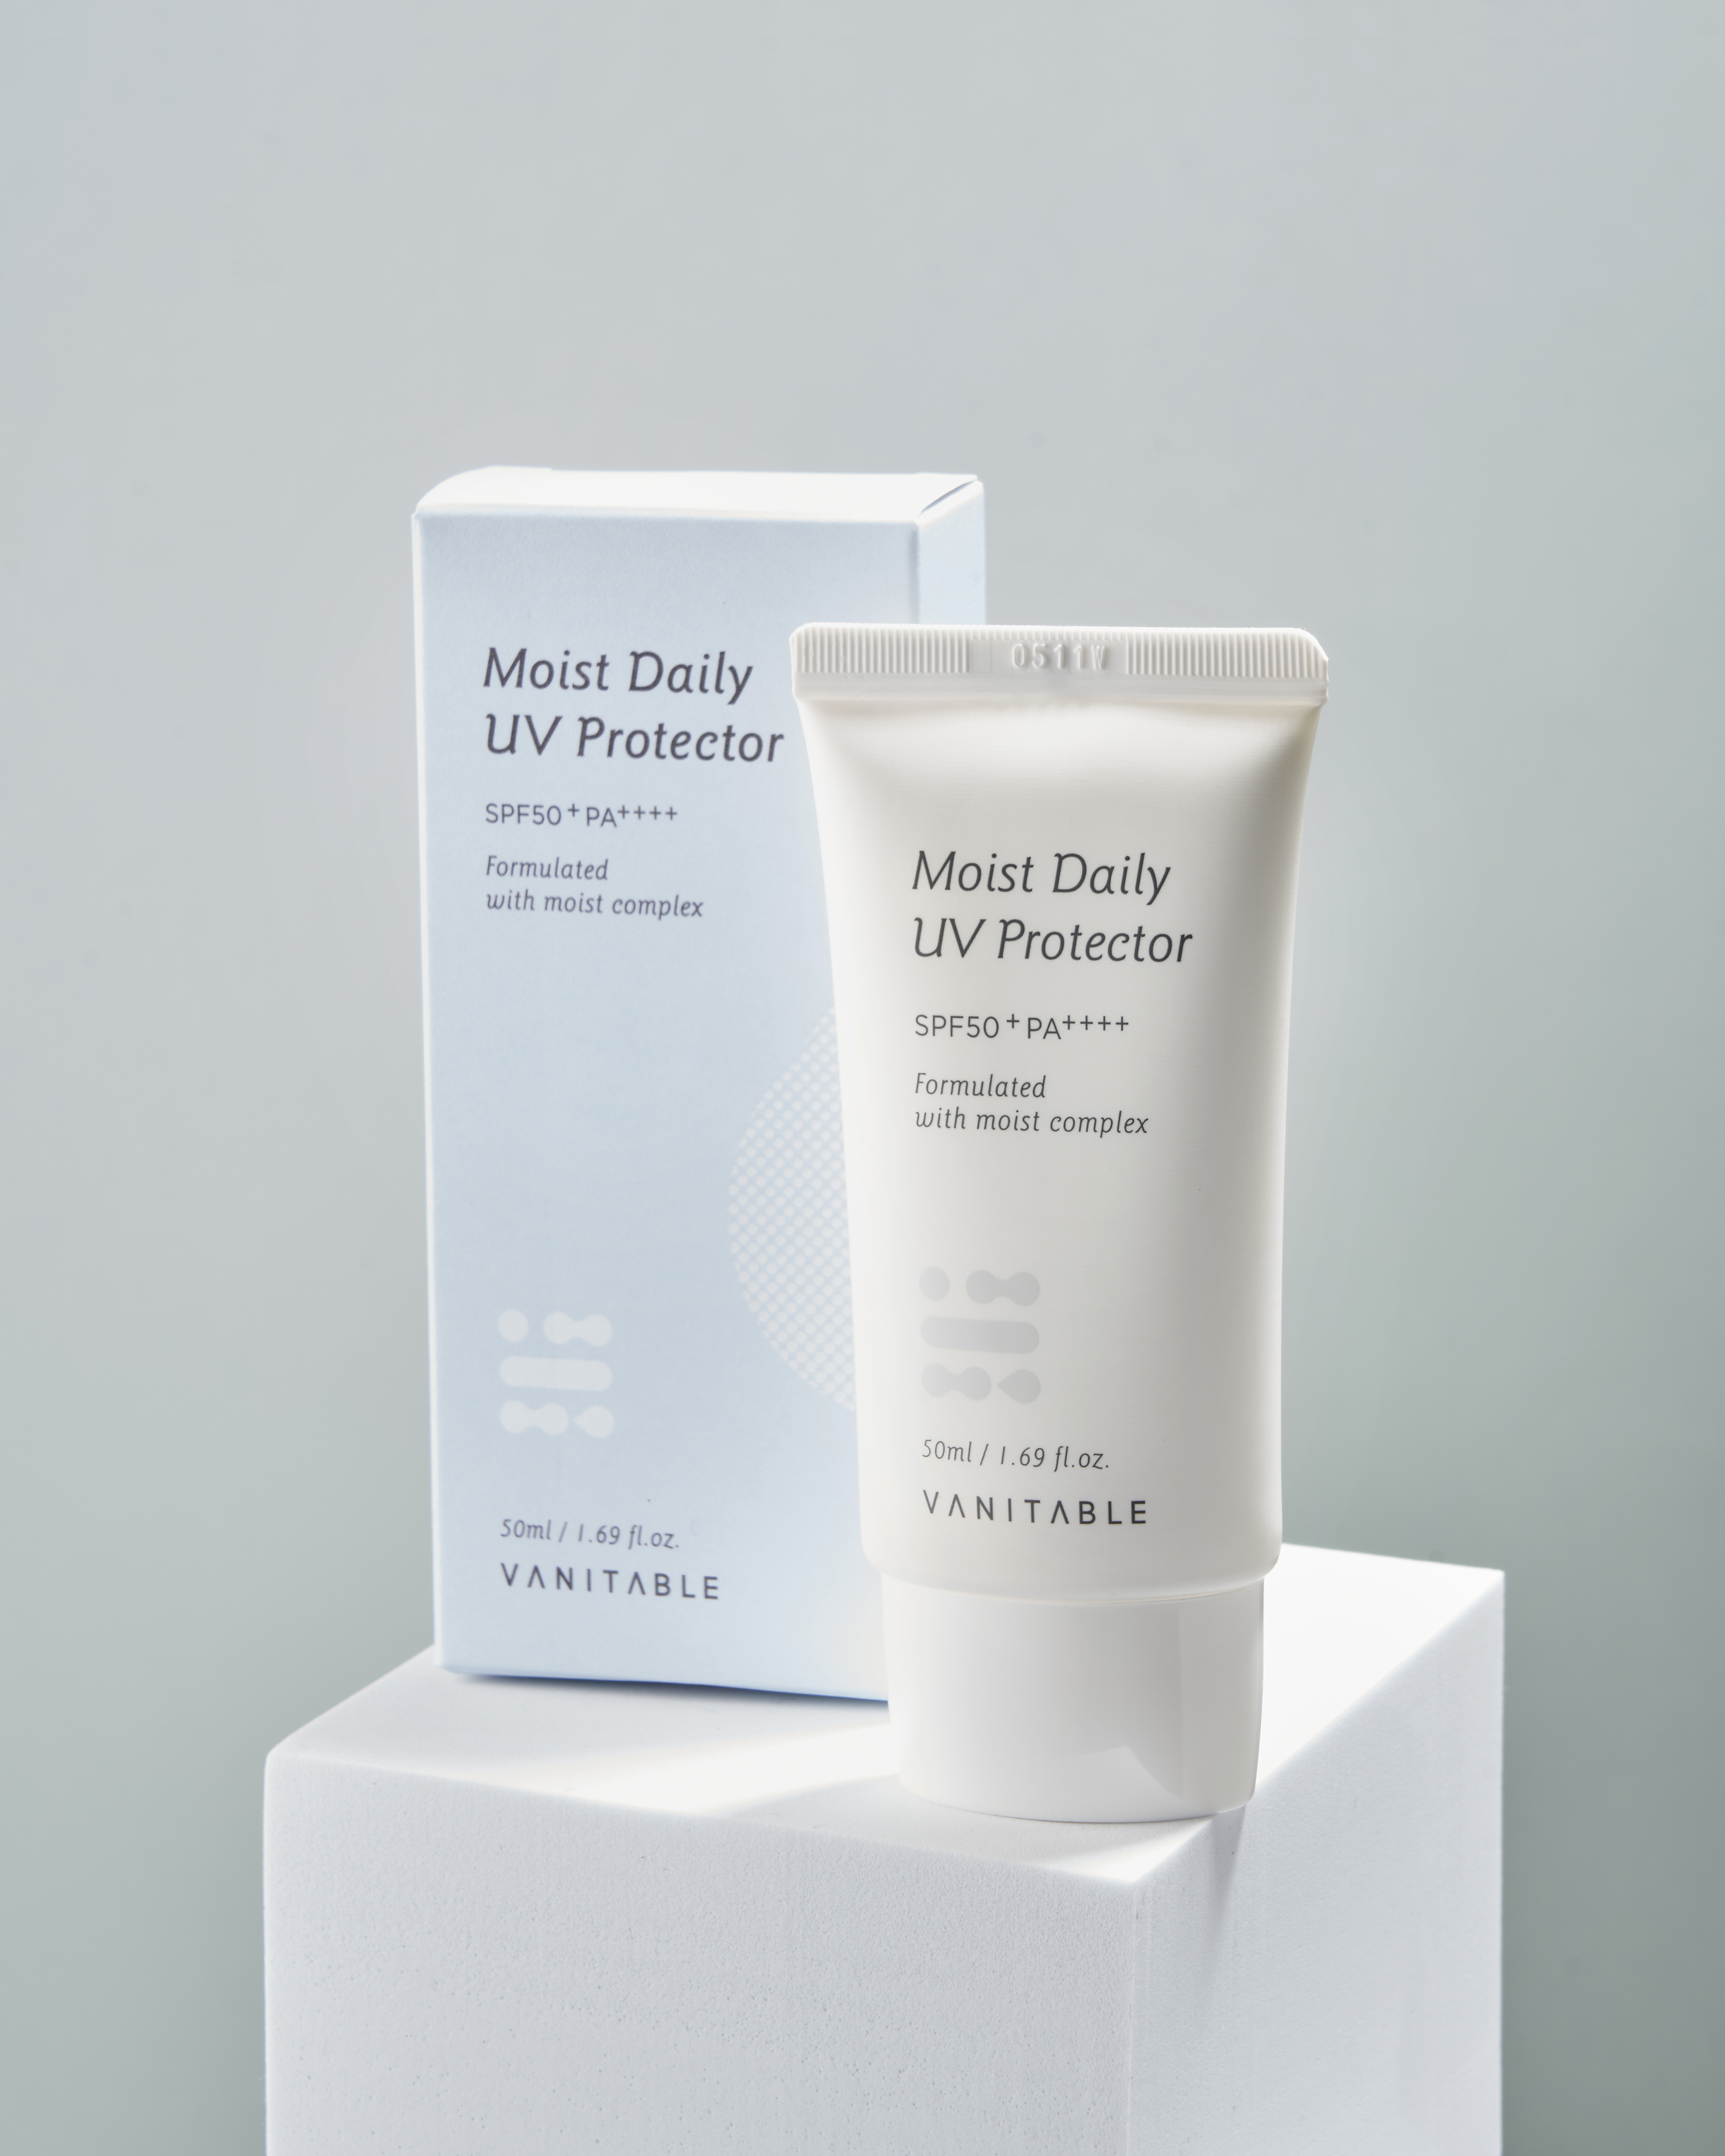 Moist Daily UV Protector that moisturizes the skin